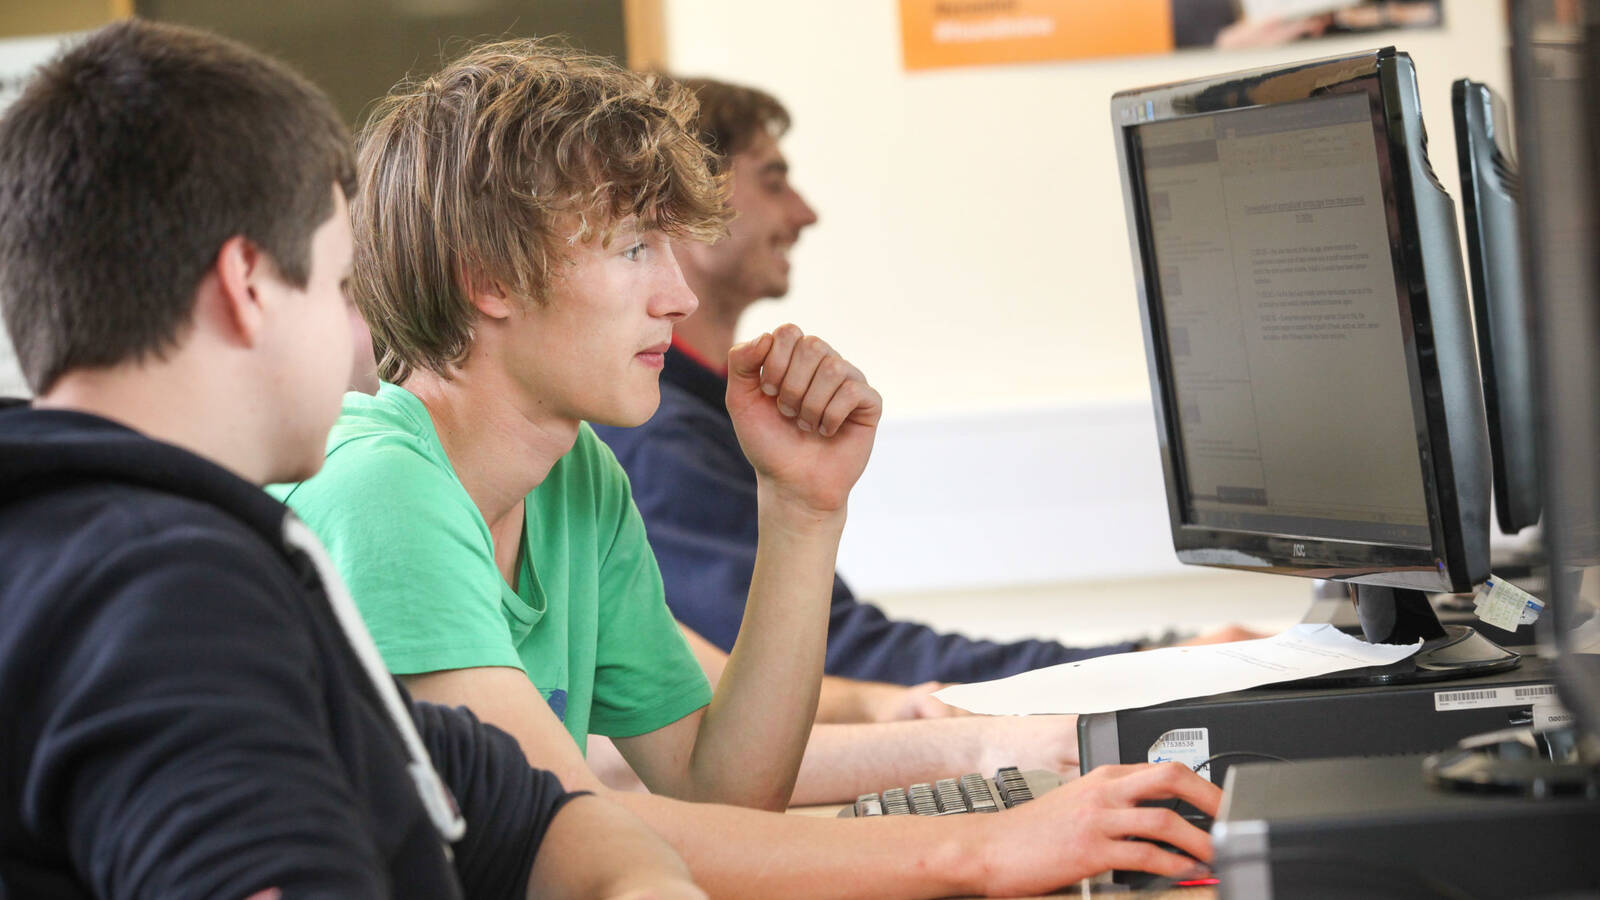 Three Glynllifon learners working in the computer room